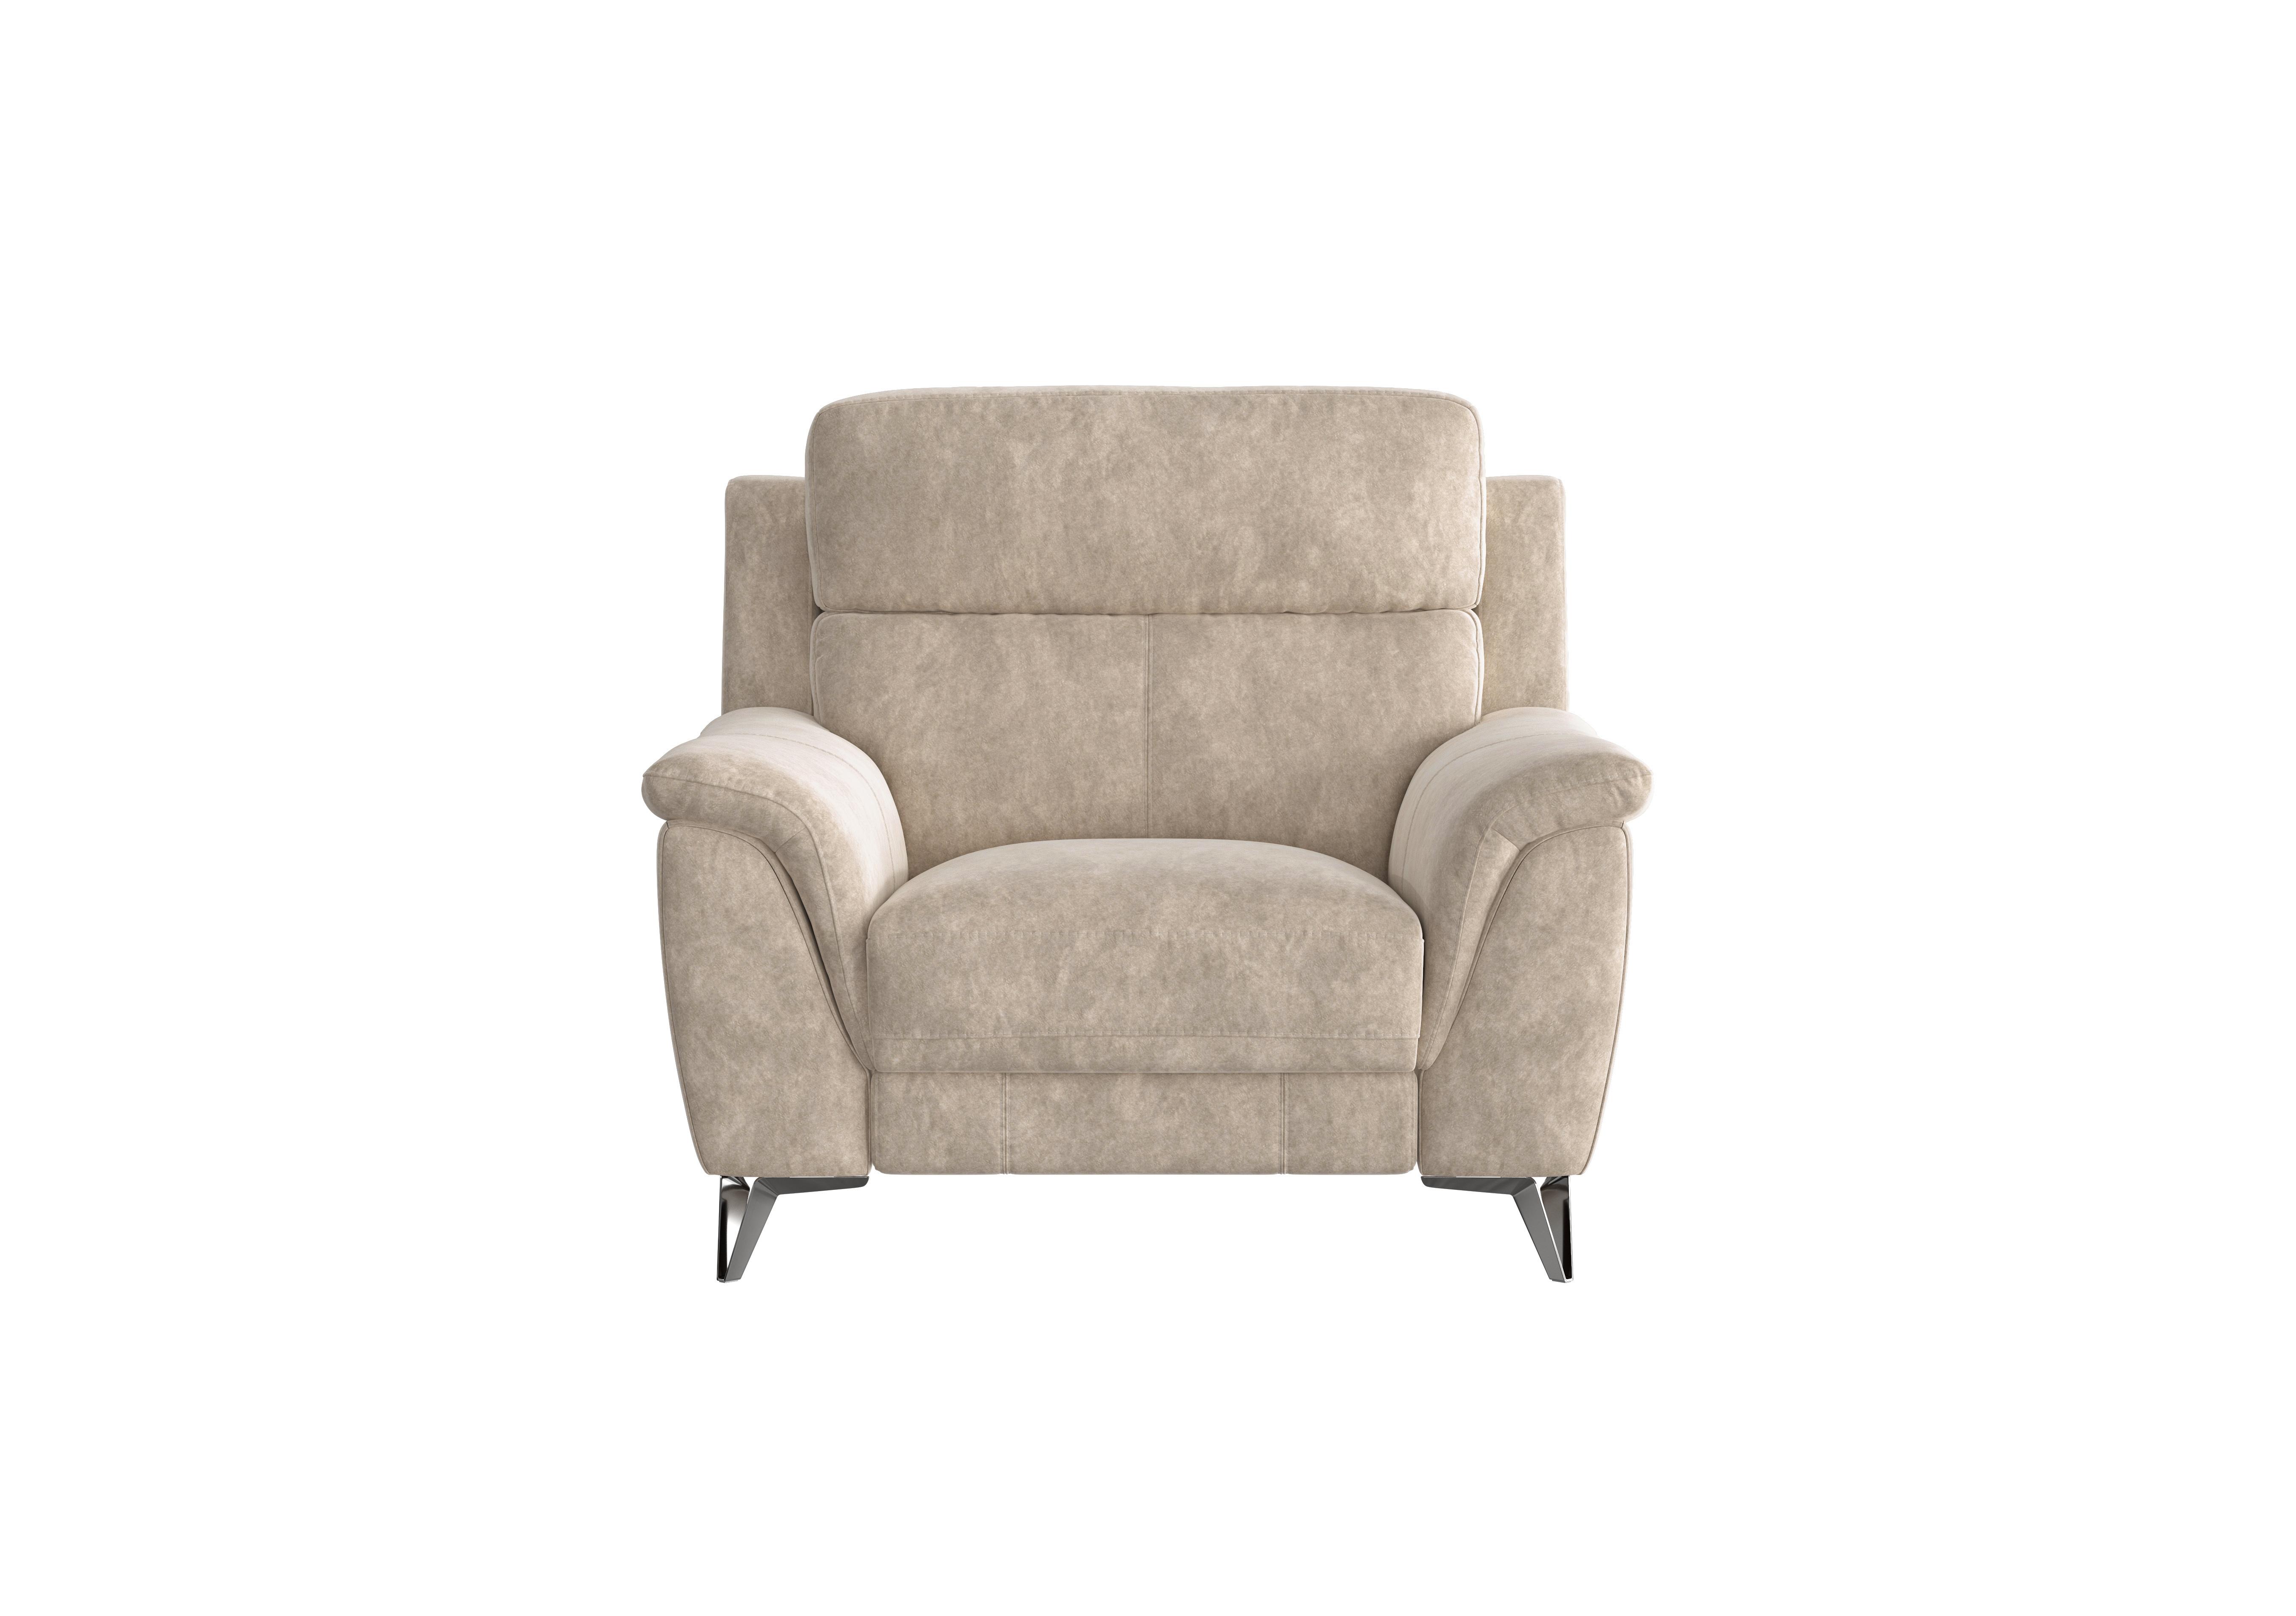 Contempo Fabric Armchair in Bfa-Bnn-R26 Fv2 Cream on Furniture Village